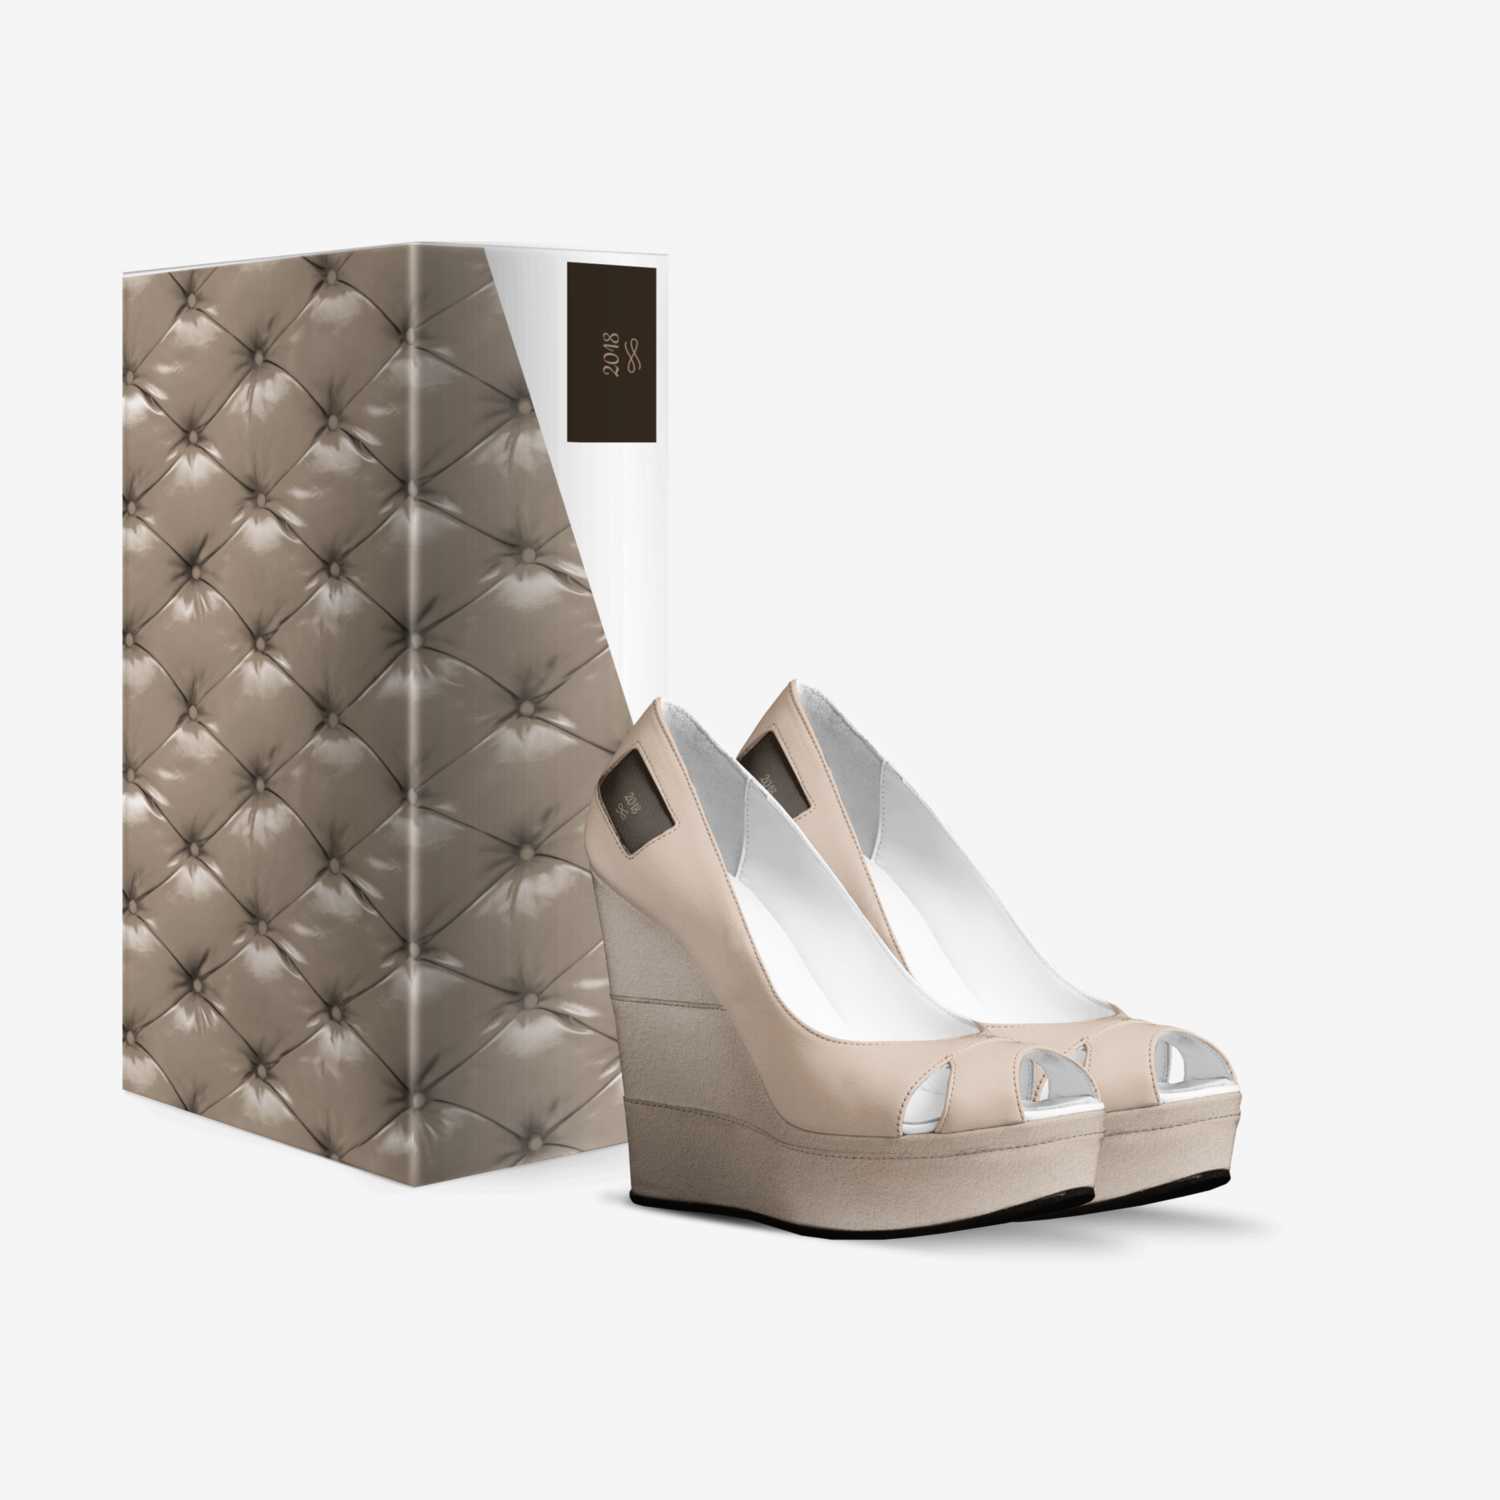 Lindas custom made in Italy shoes by Linda Jones | Box view